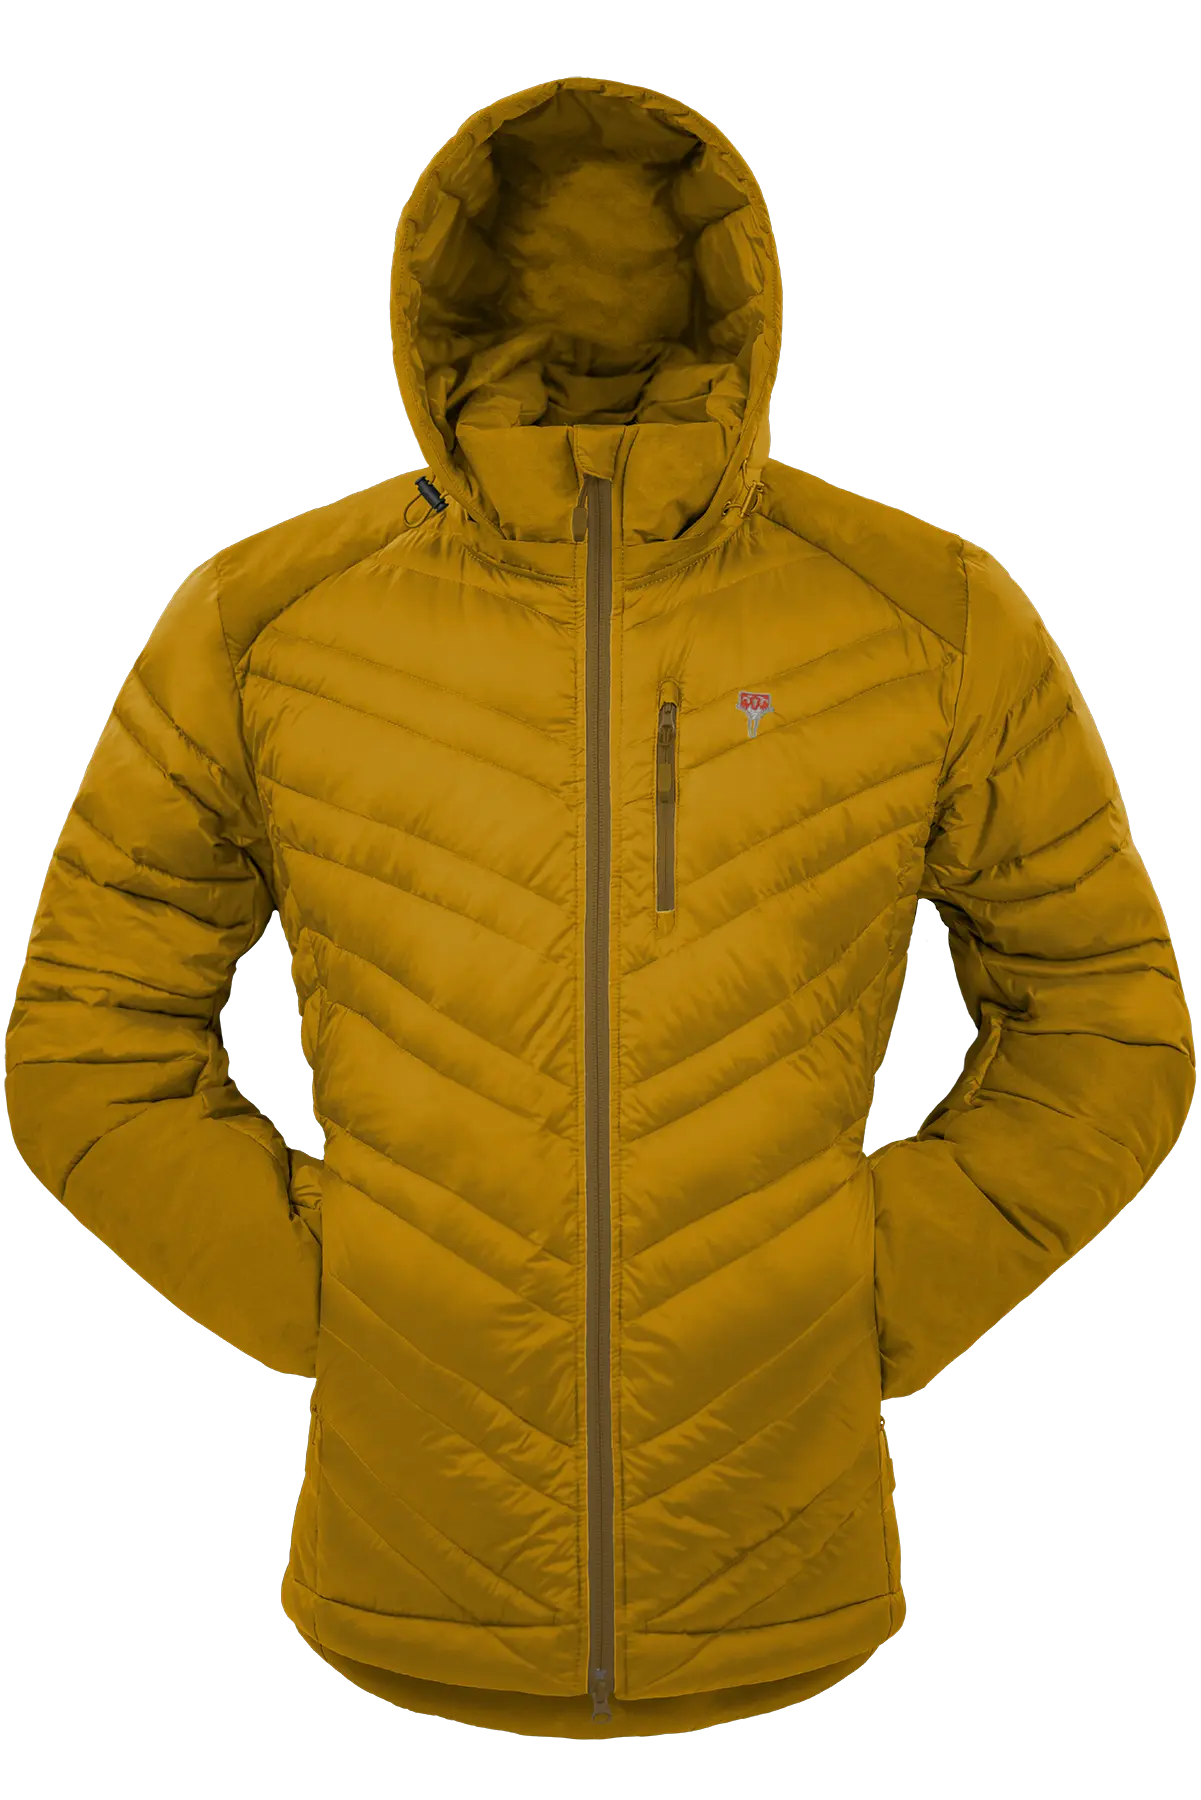 gruezi-bag-jacke-lightful-downwool-jacket-m-pineapple-mustard-2650-6005-amainfrei Kopie